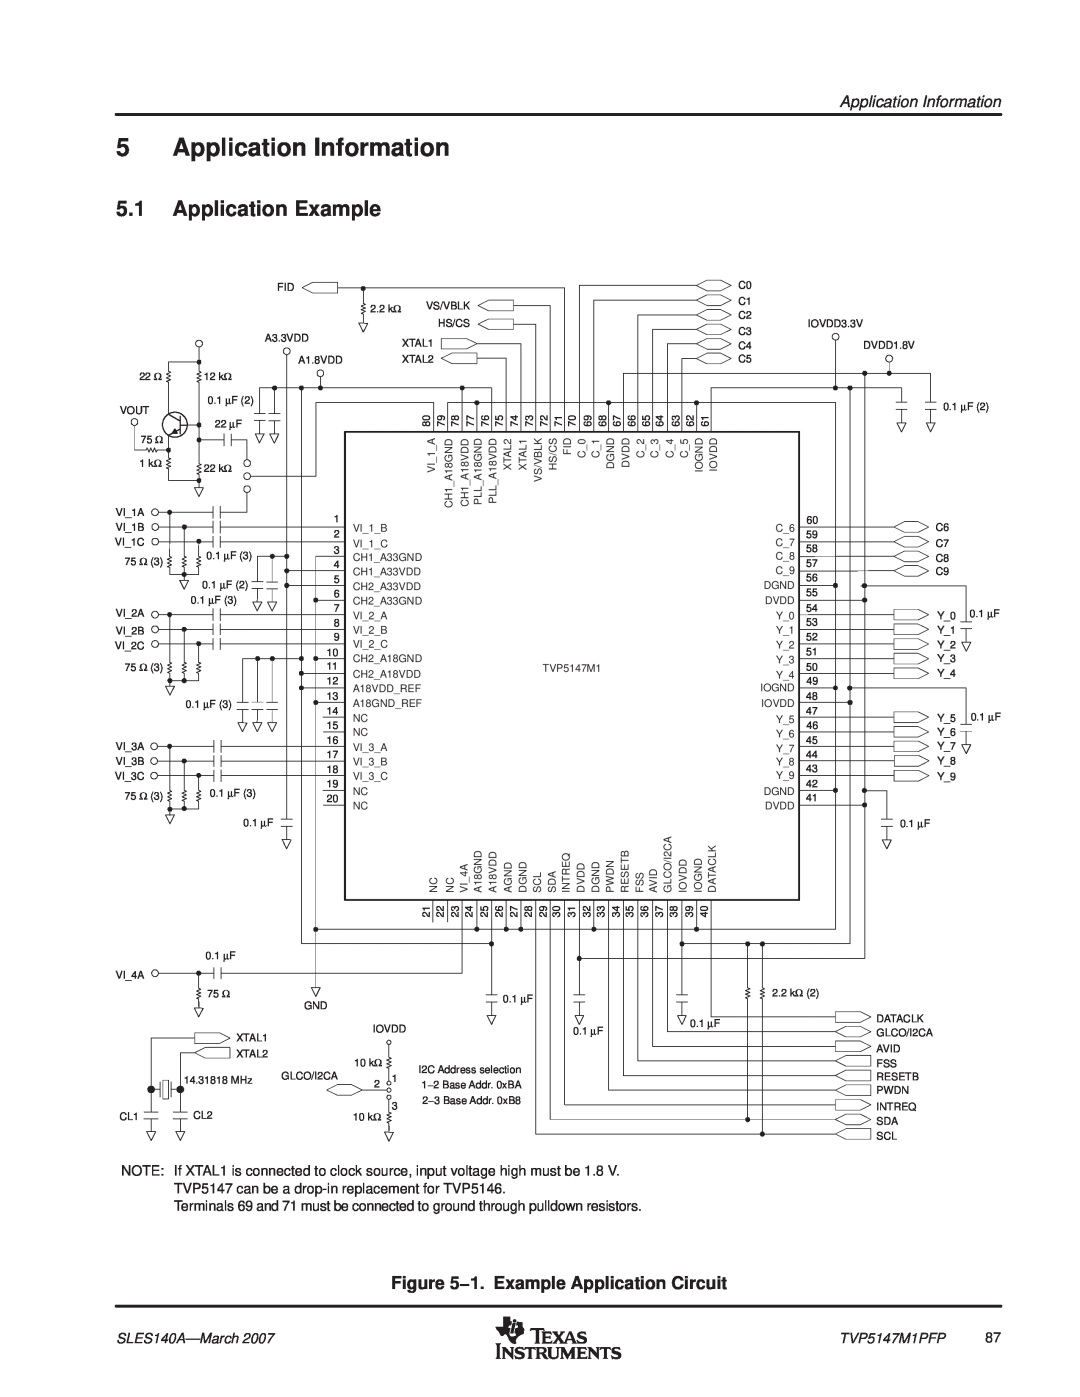 Texas Instruments TVP5147M1PFP manual Application Information, Application Example, 1. Example Application Circuit 